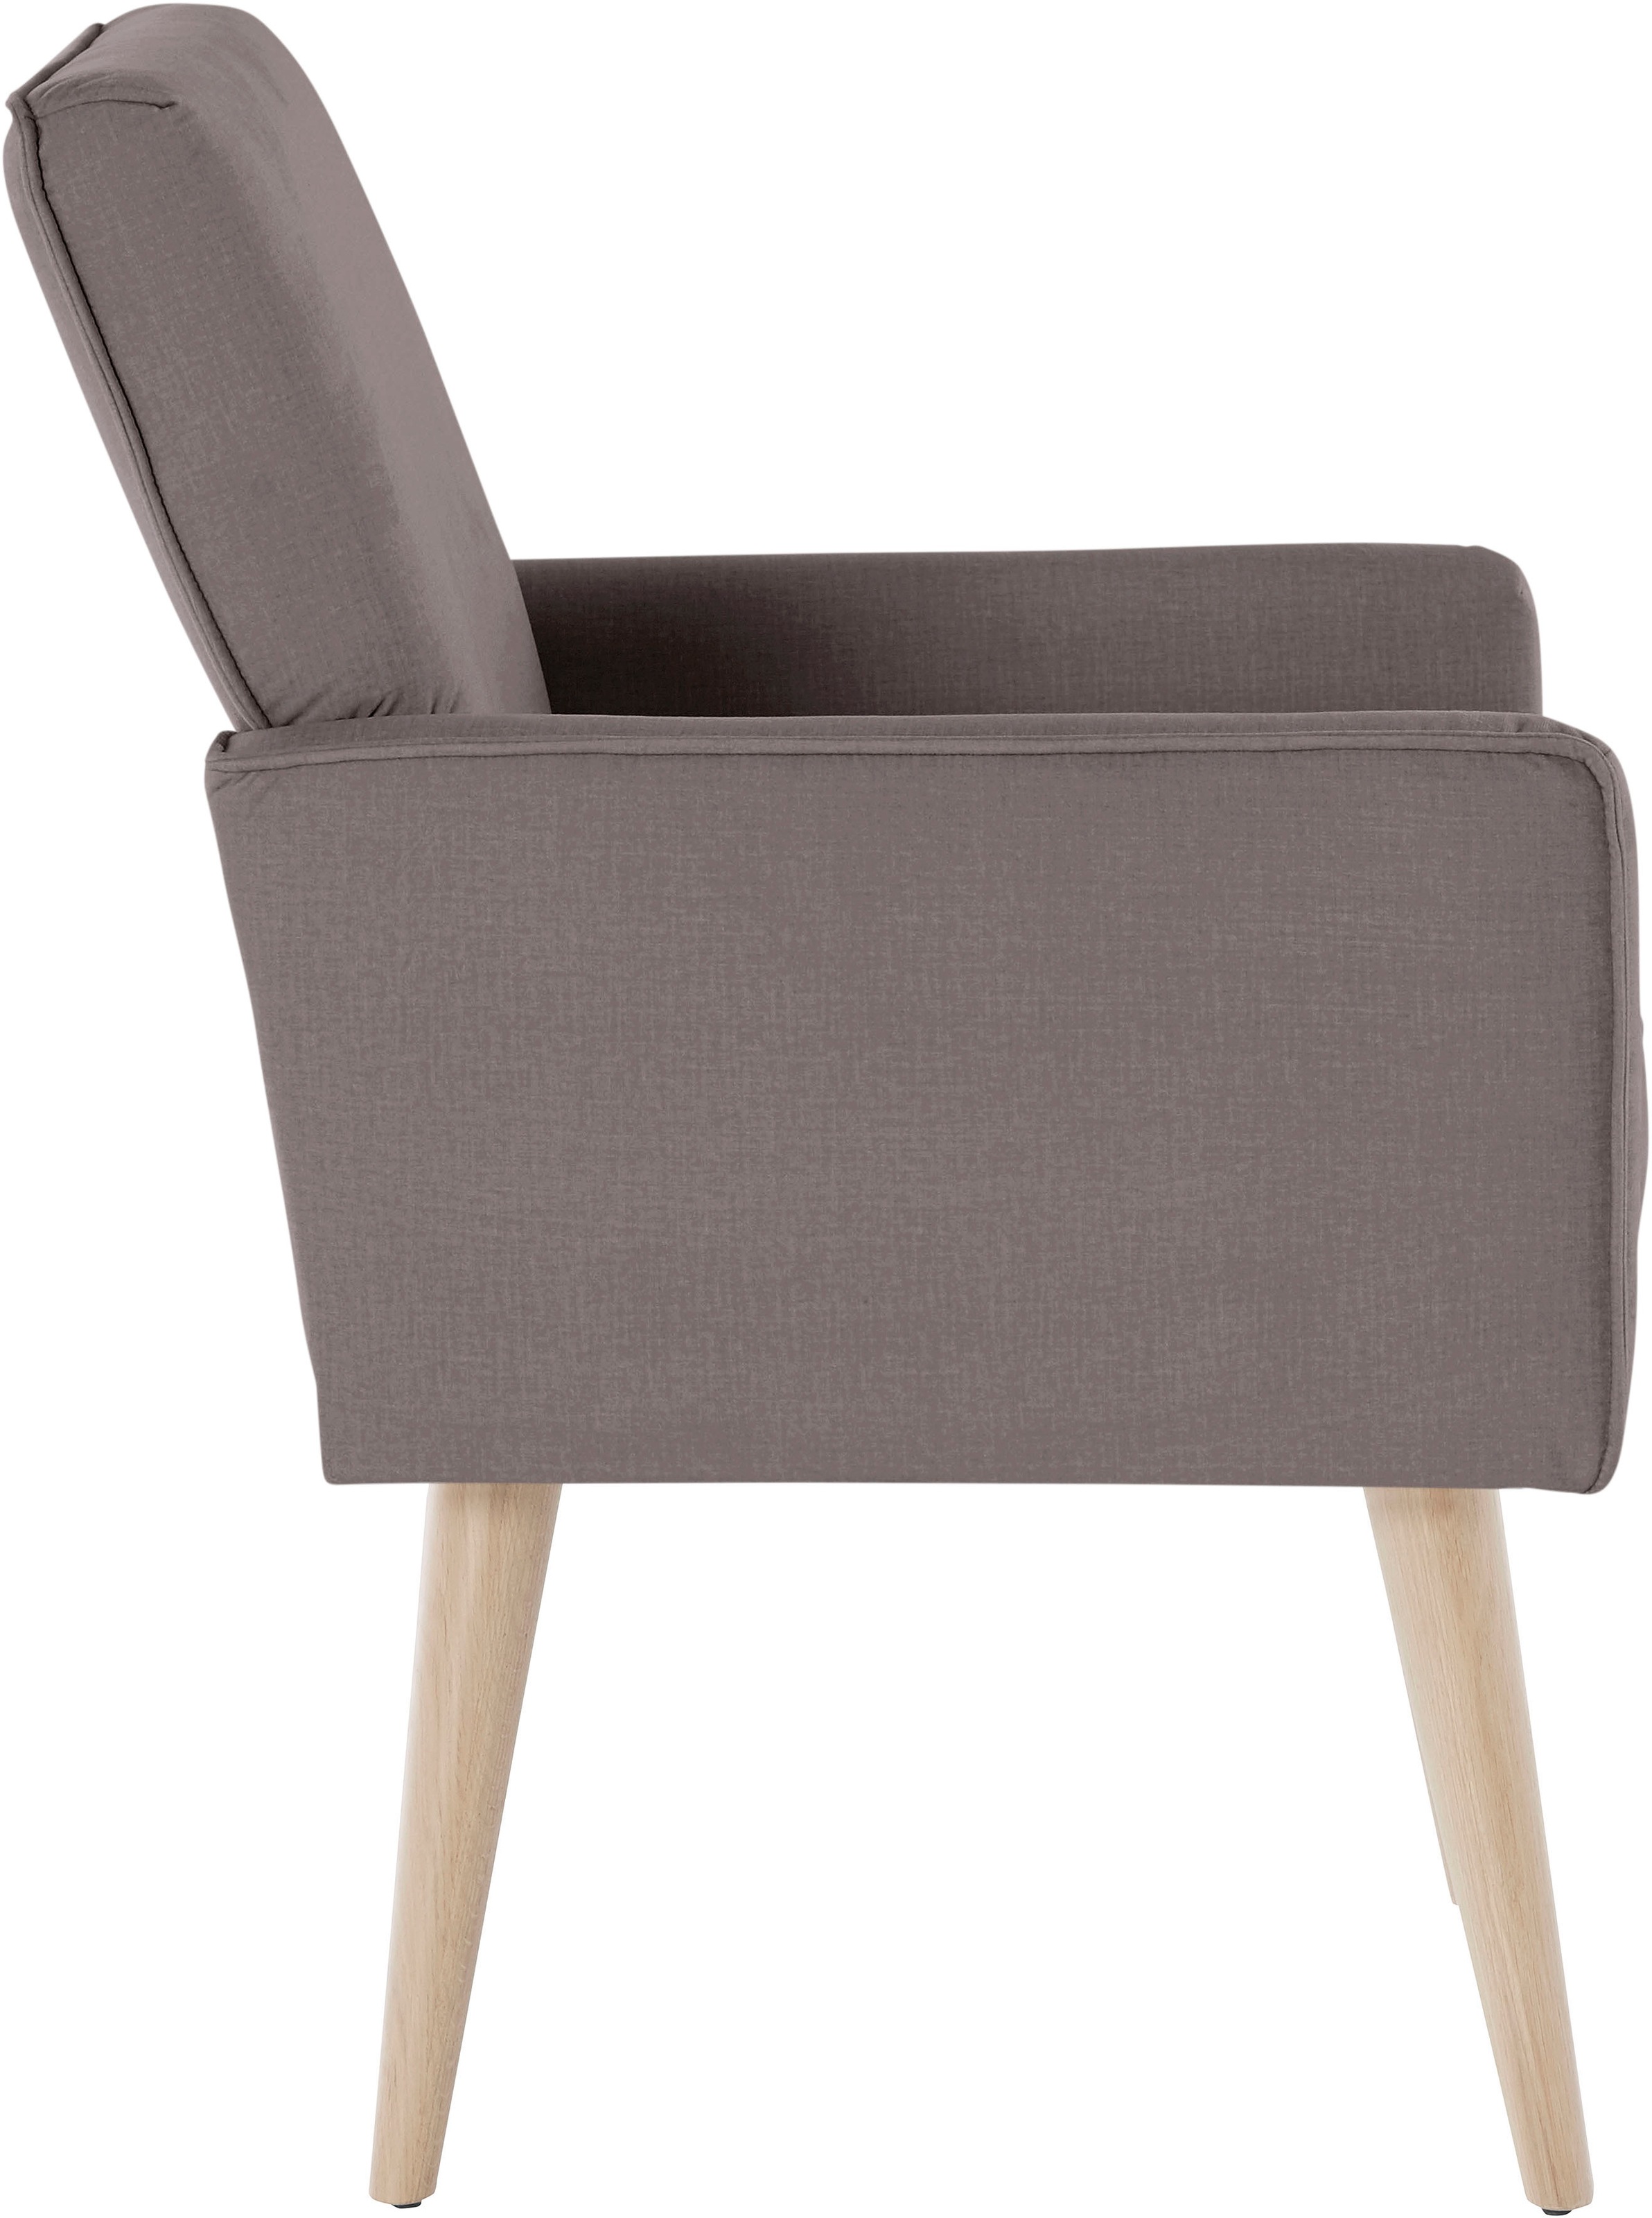 exxpo - »Lungo«, kaufen sofa fashion 64 auf Sessel Rechnung cm Breite